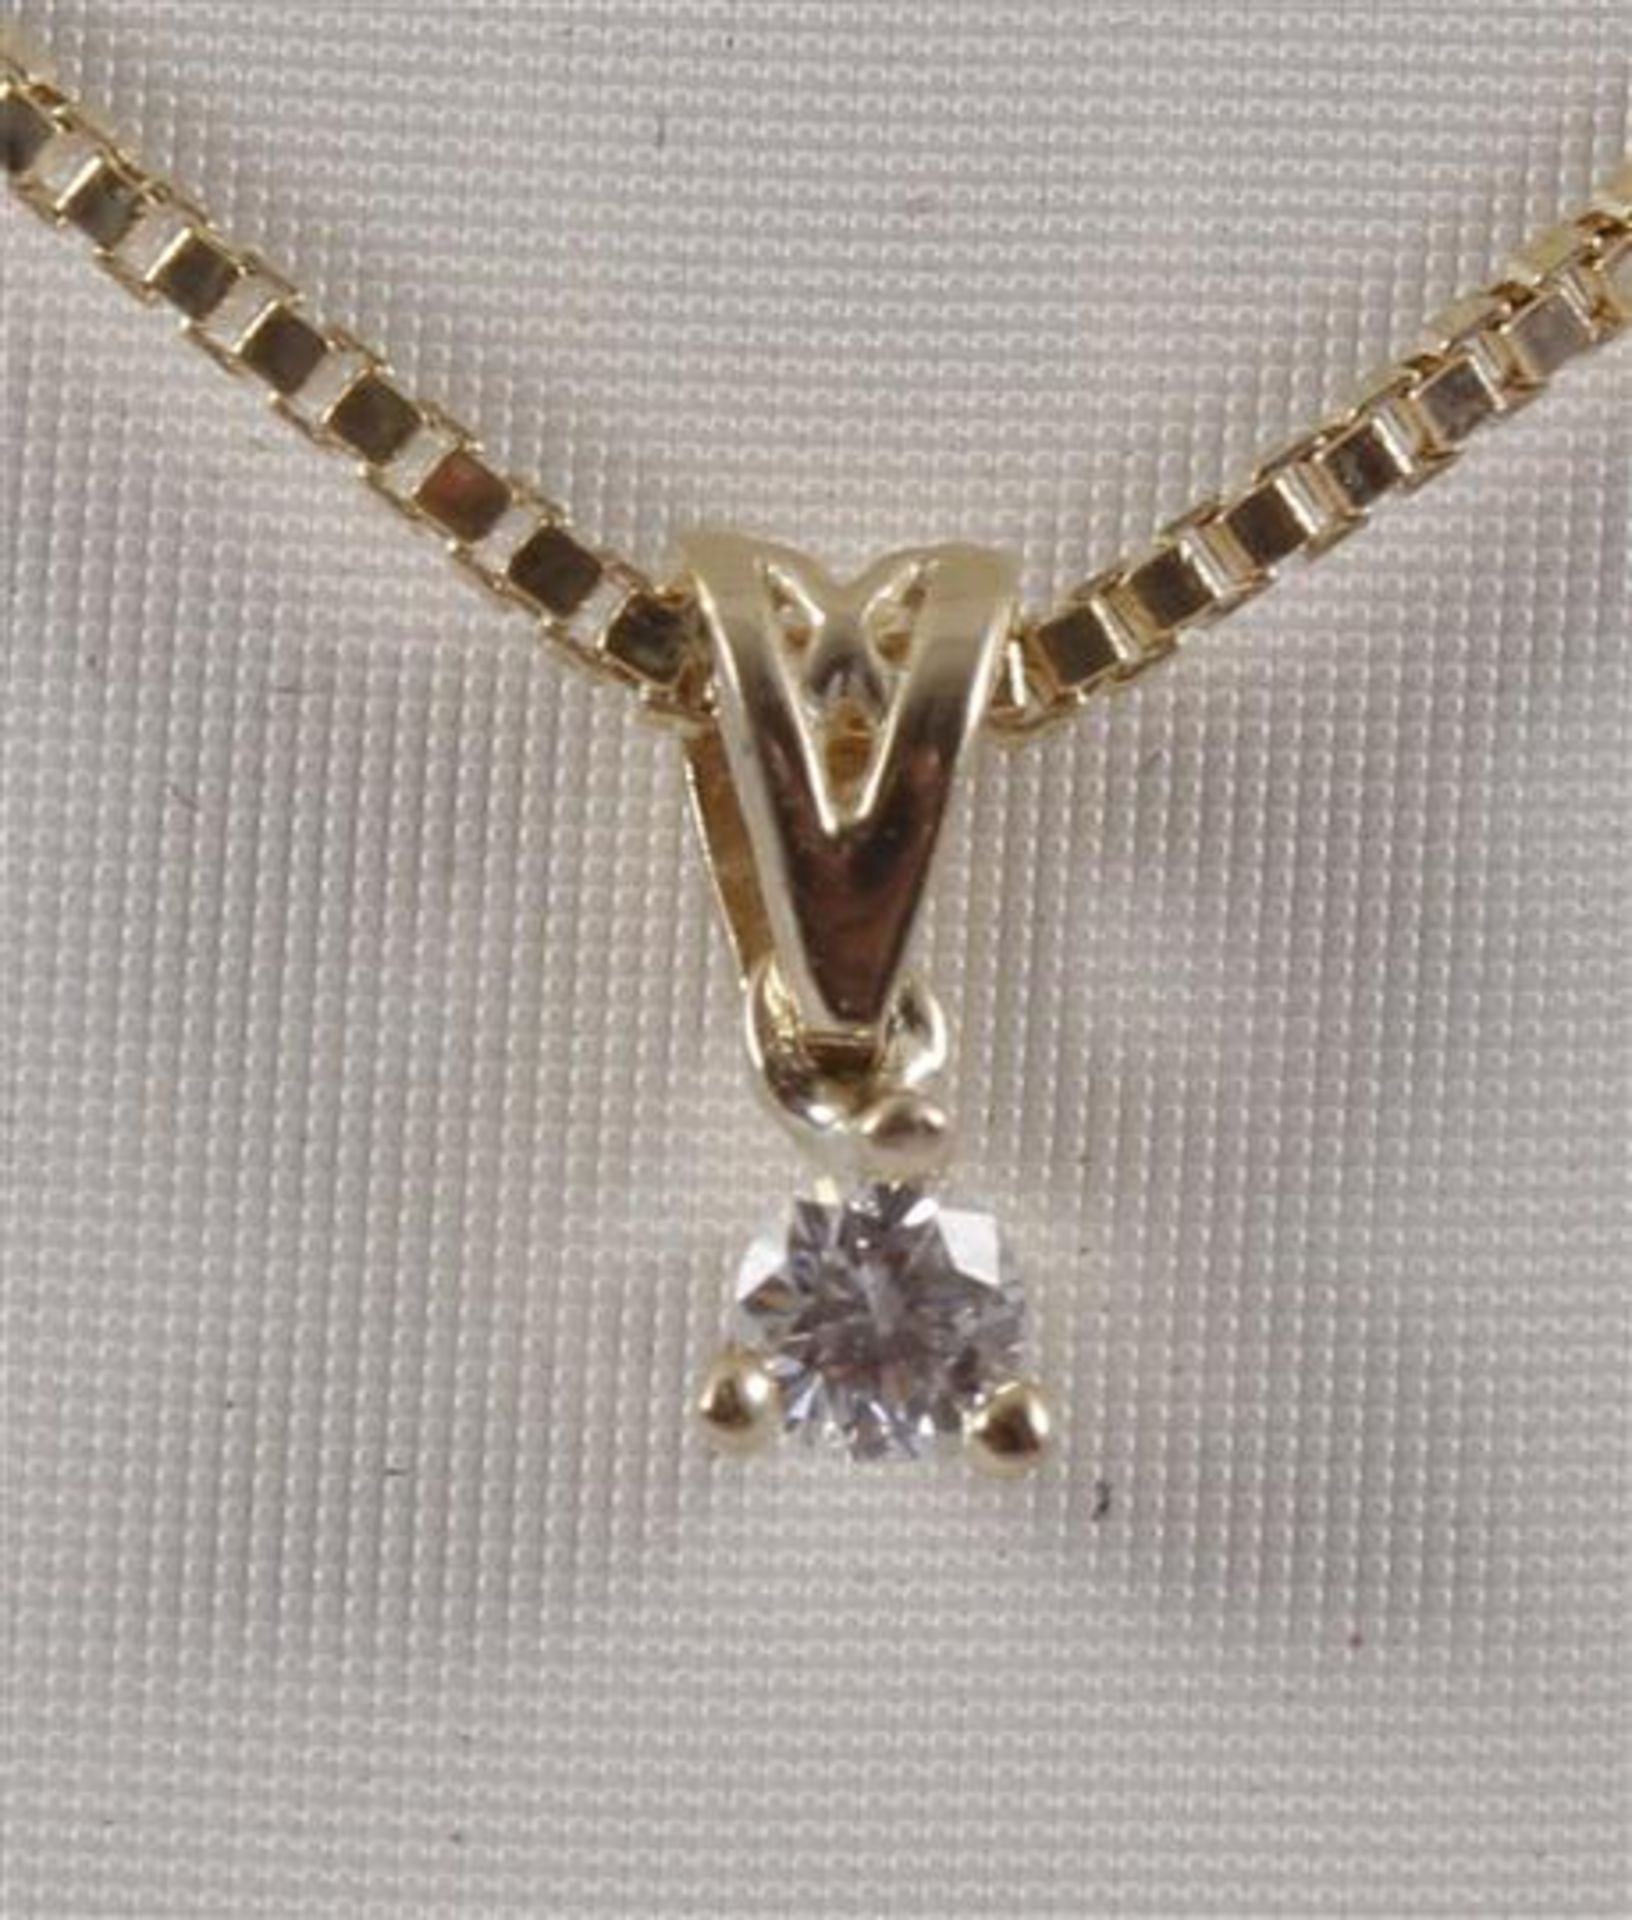 Gold Venetian necklace, 14 krt., 44 cm long, with a solitaire pendant, marked 585, set with - Bild 2 aus 2